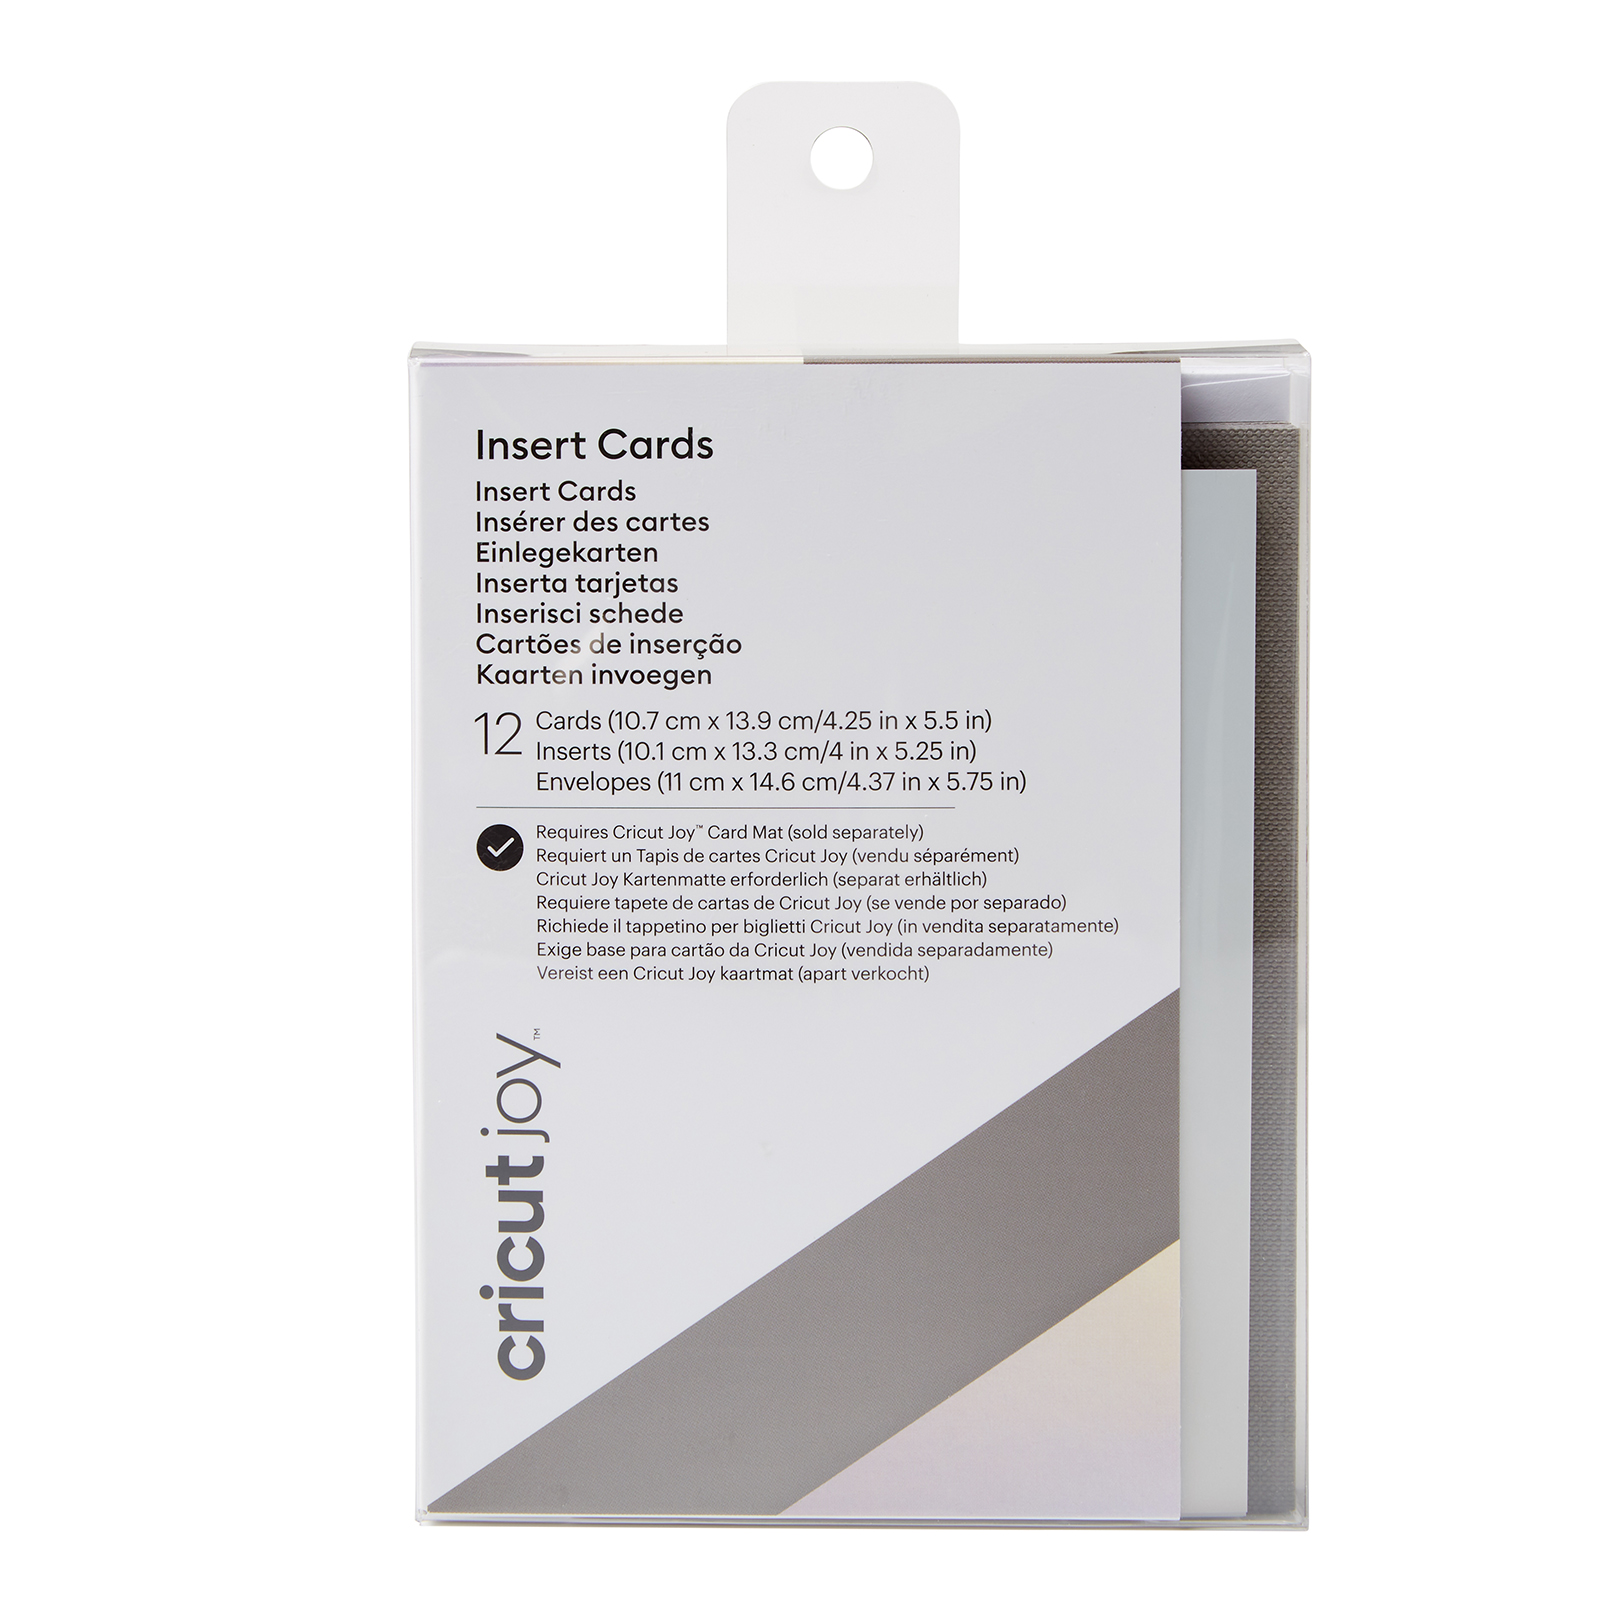 Cricut Joy • Insert Cards Grey Gold Metallic 5.5x4.25" 12 sheets